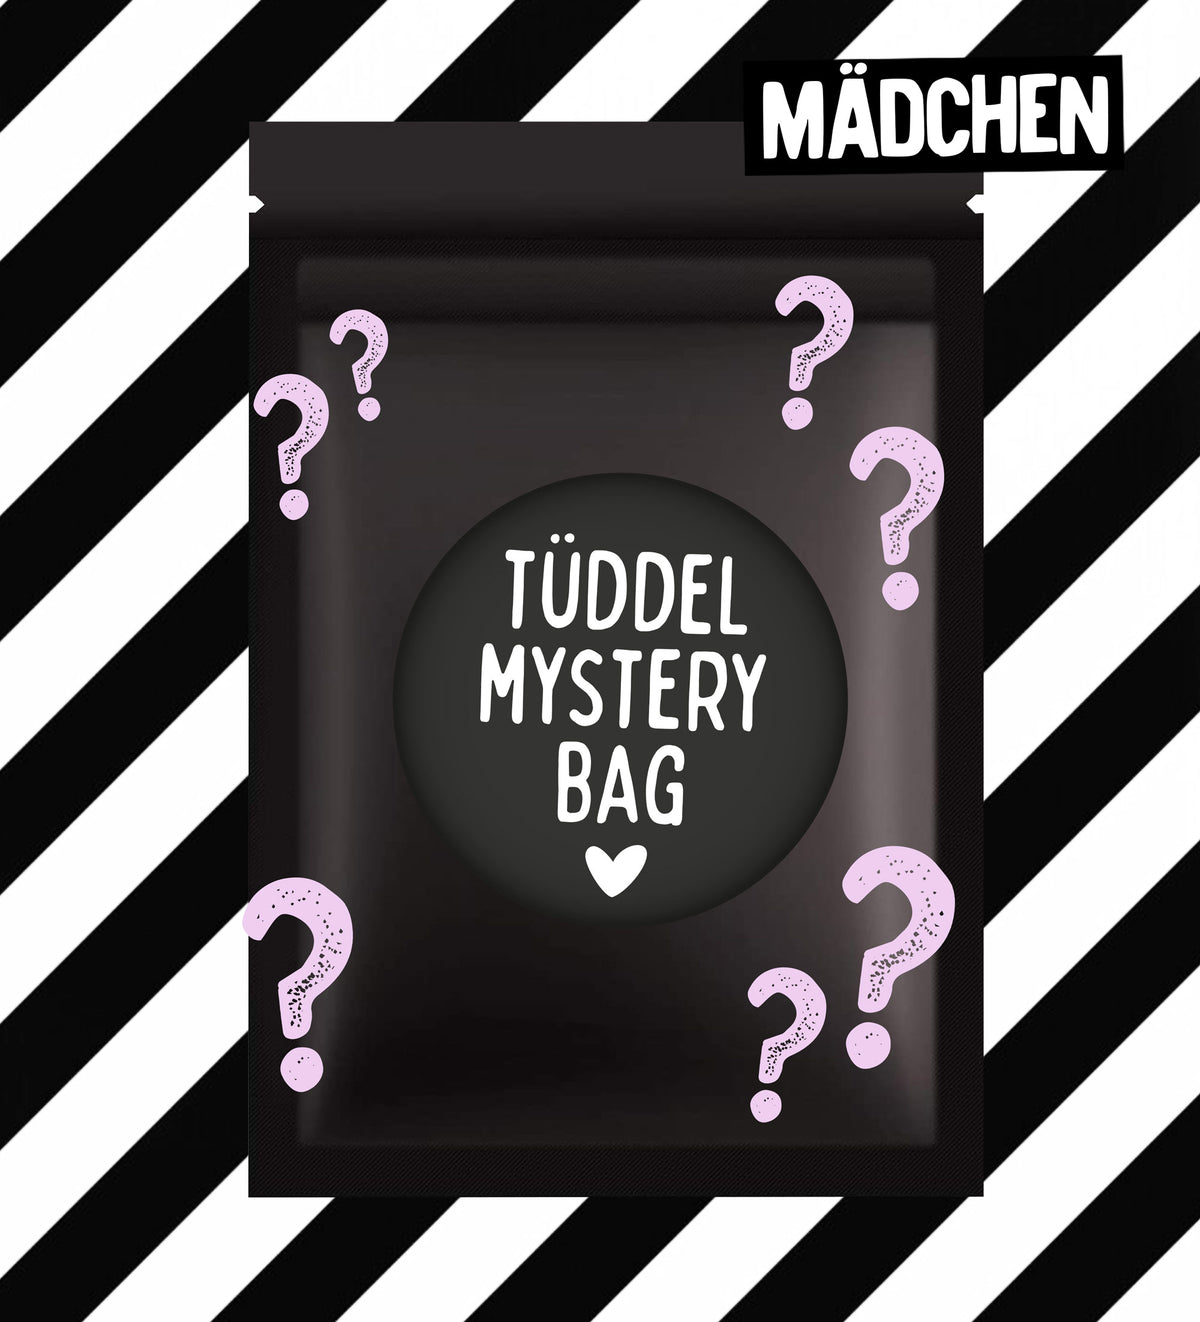 Tüddel Mystery Bag - Mädchen *SEPTEMBER*